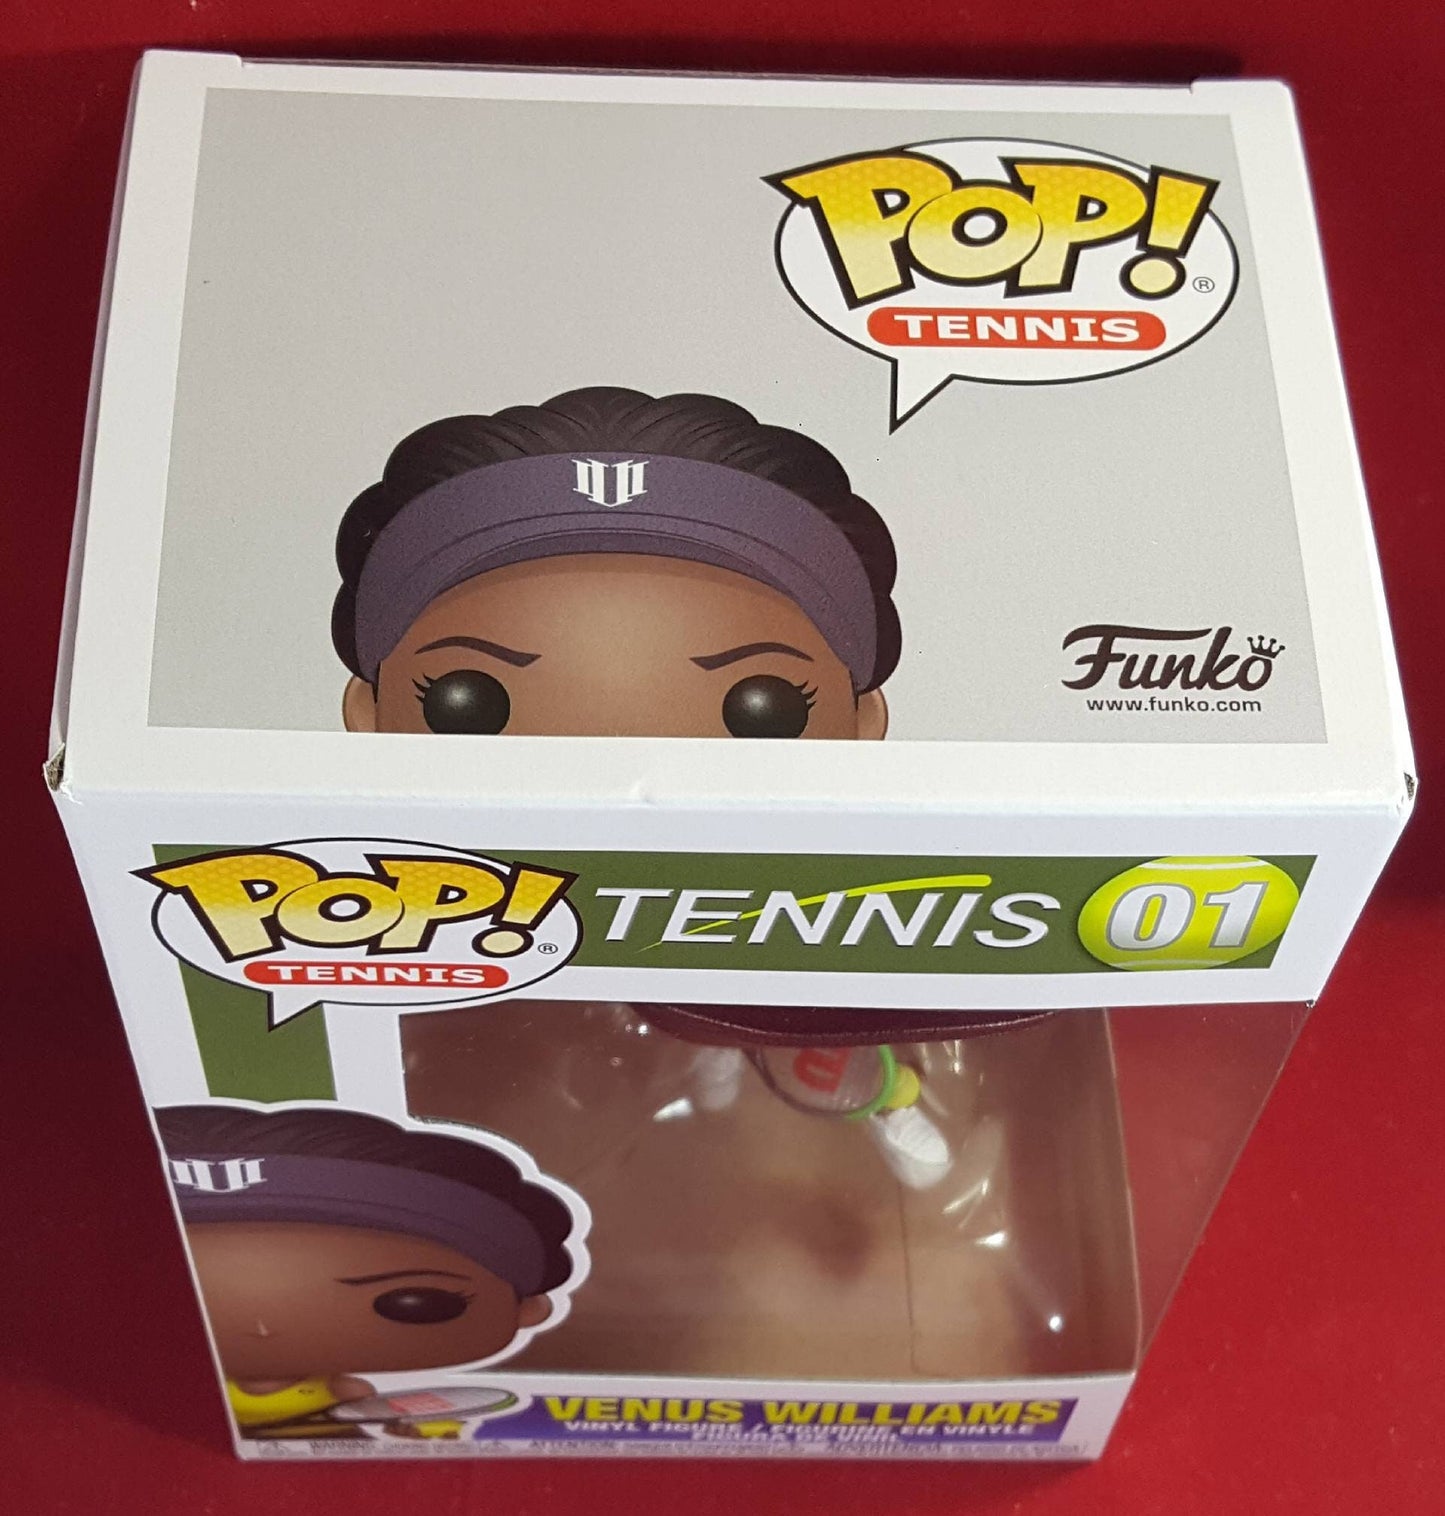 Venus Williams tennis   funko 01 (nib)